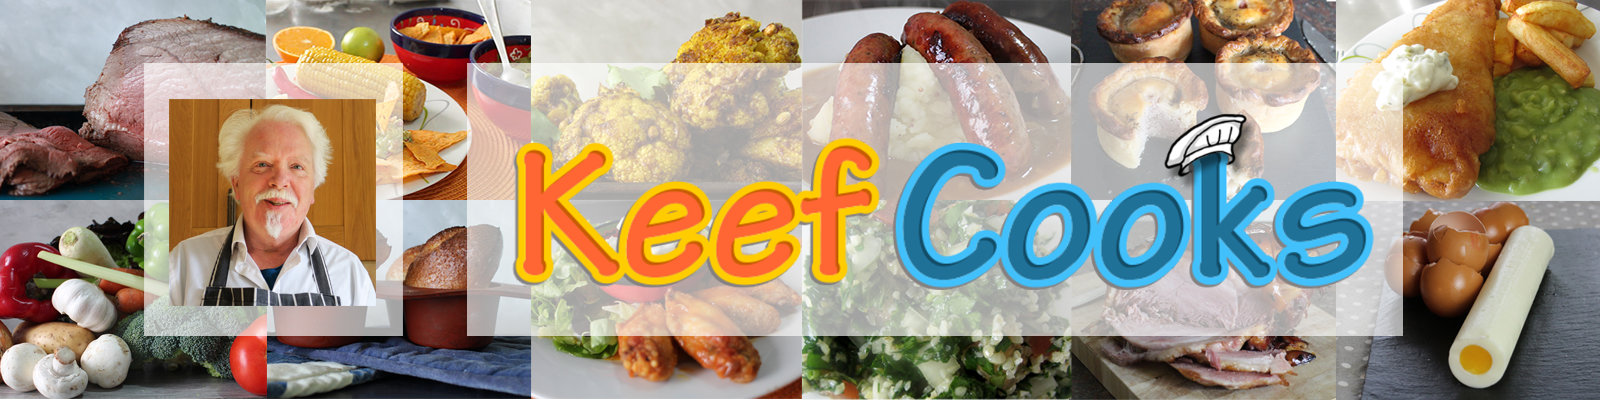 Keef Cooks logo